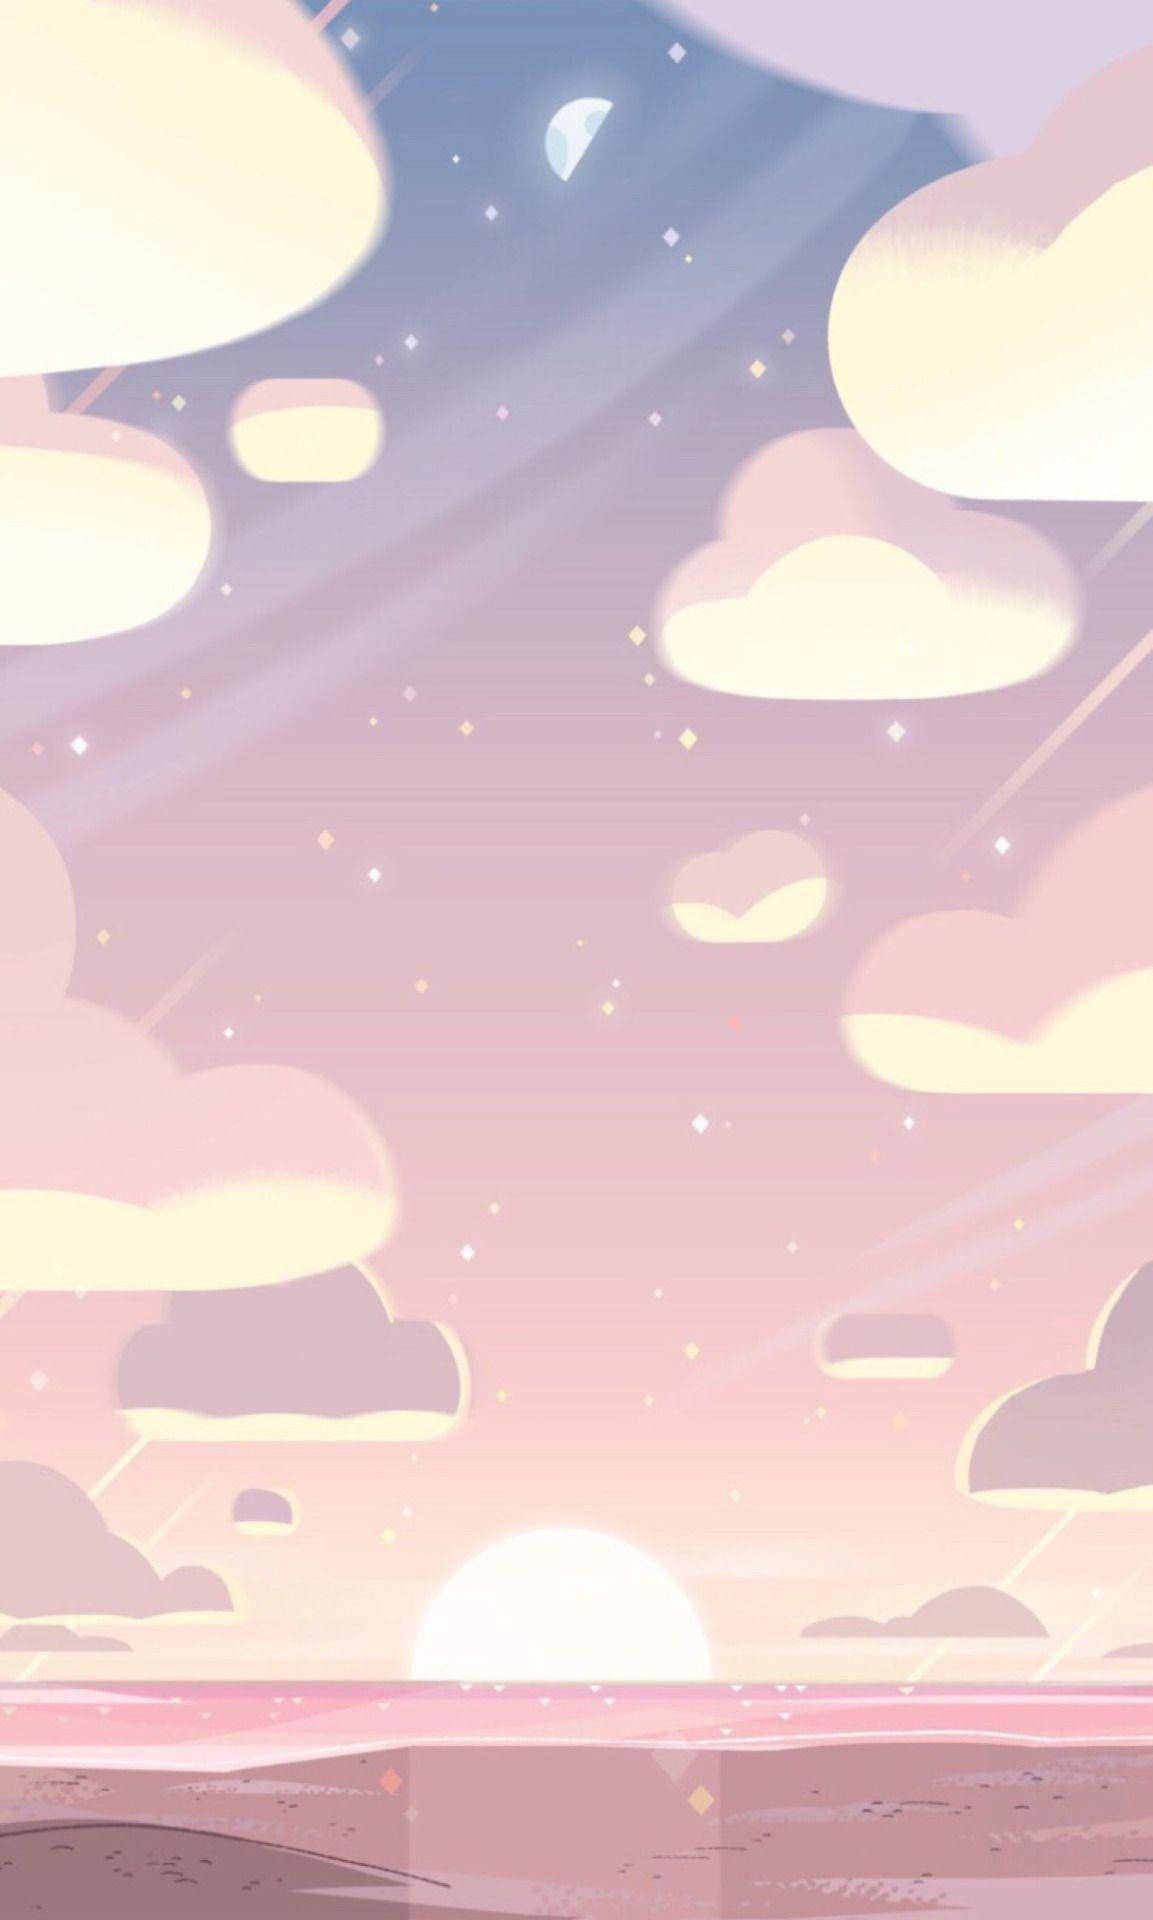 Steven Universe Sunset Cute Tablet Background